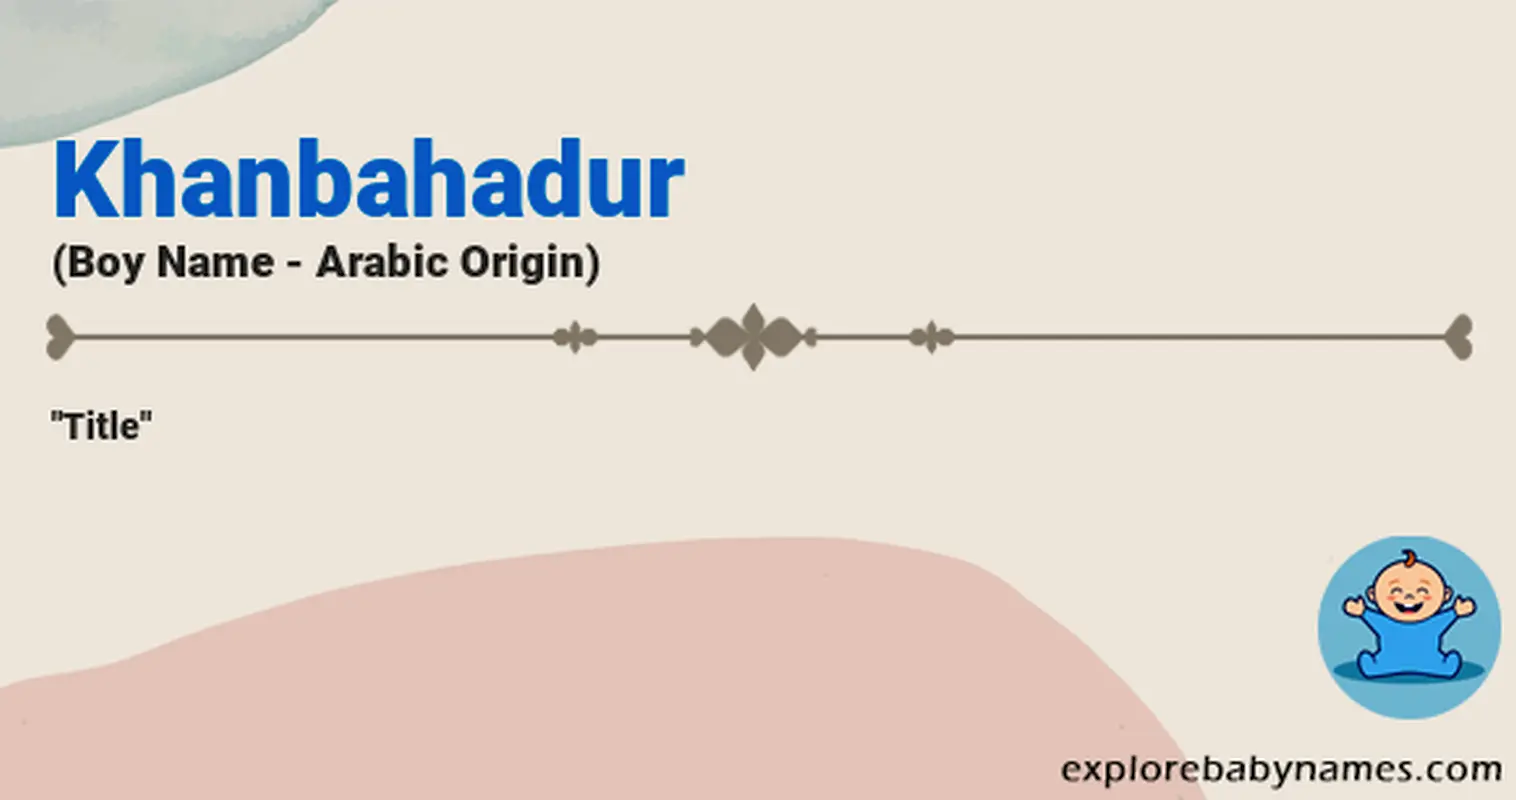 Meaning of Khanbahadur